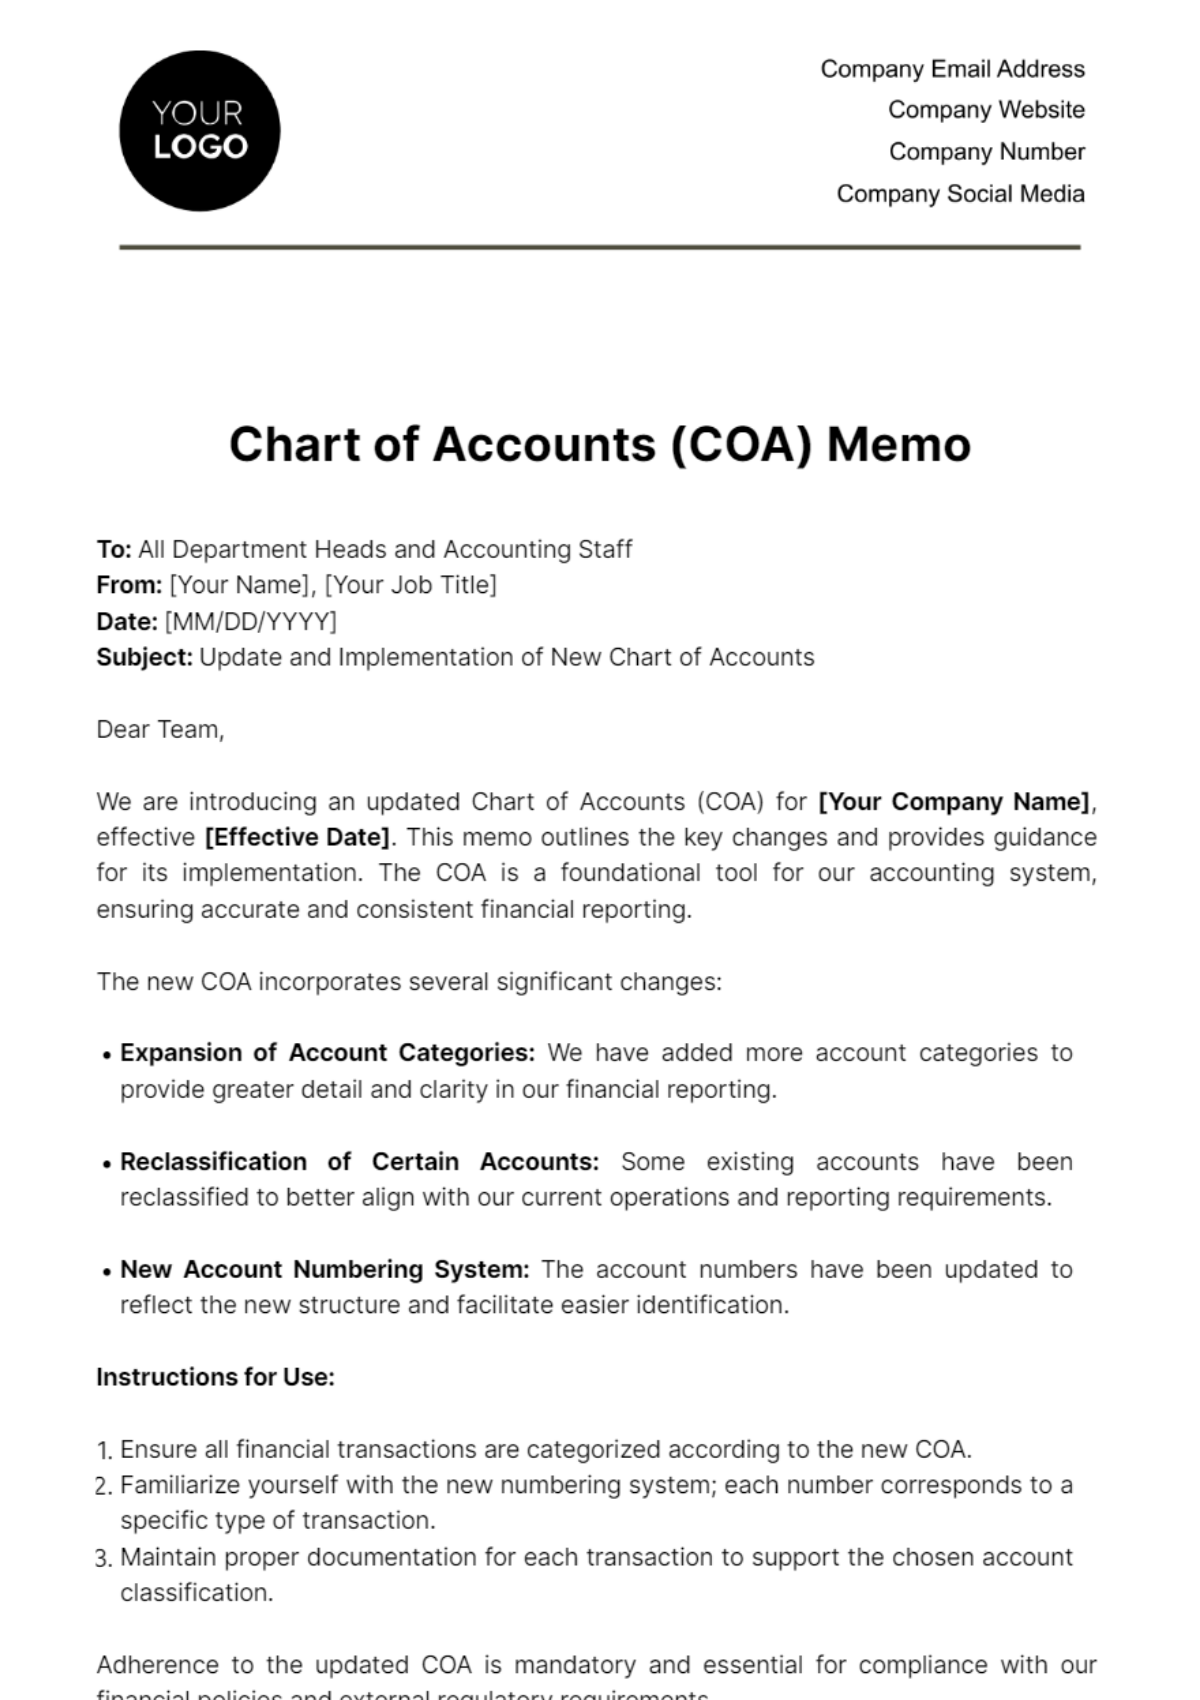 Chart of Accounts Memo Template